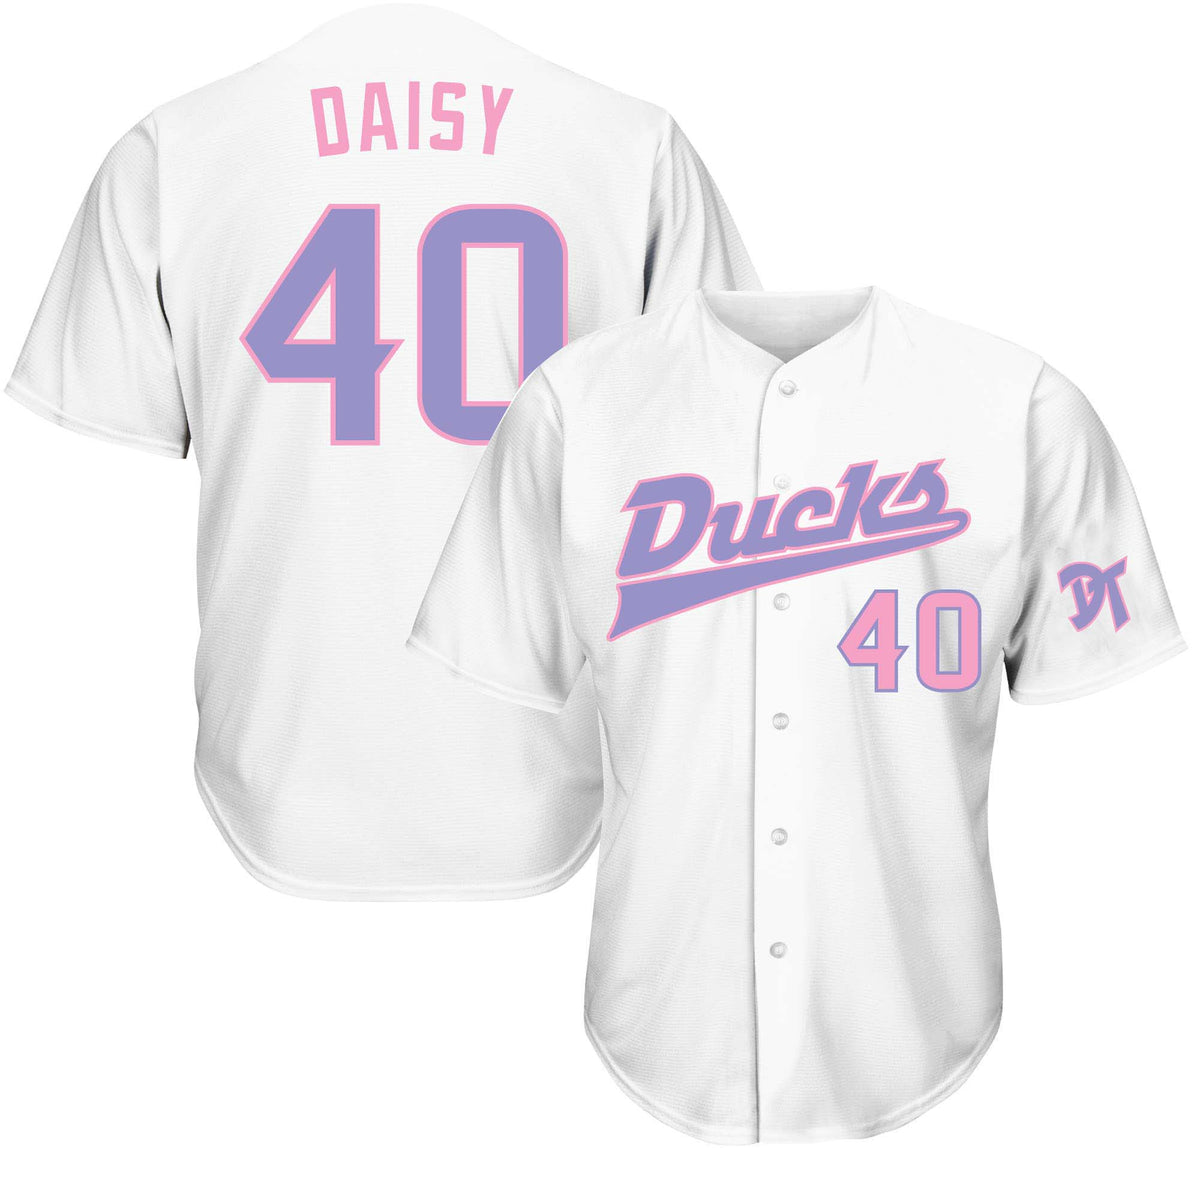 Ducks Baseball Jersey Daisy